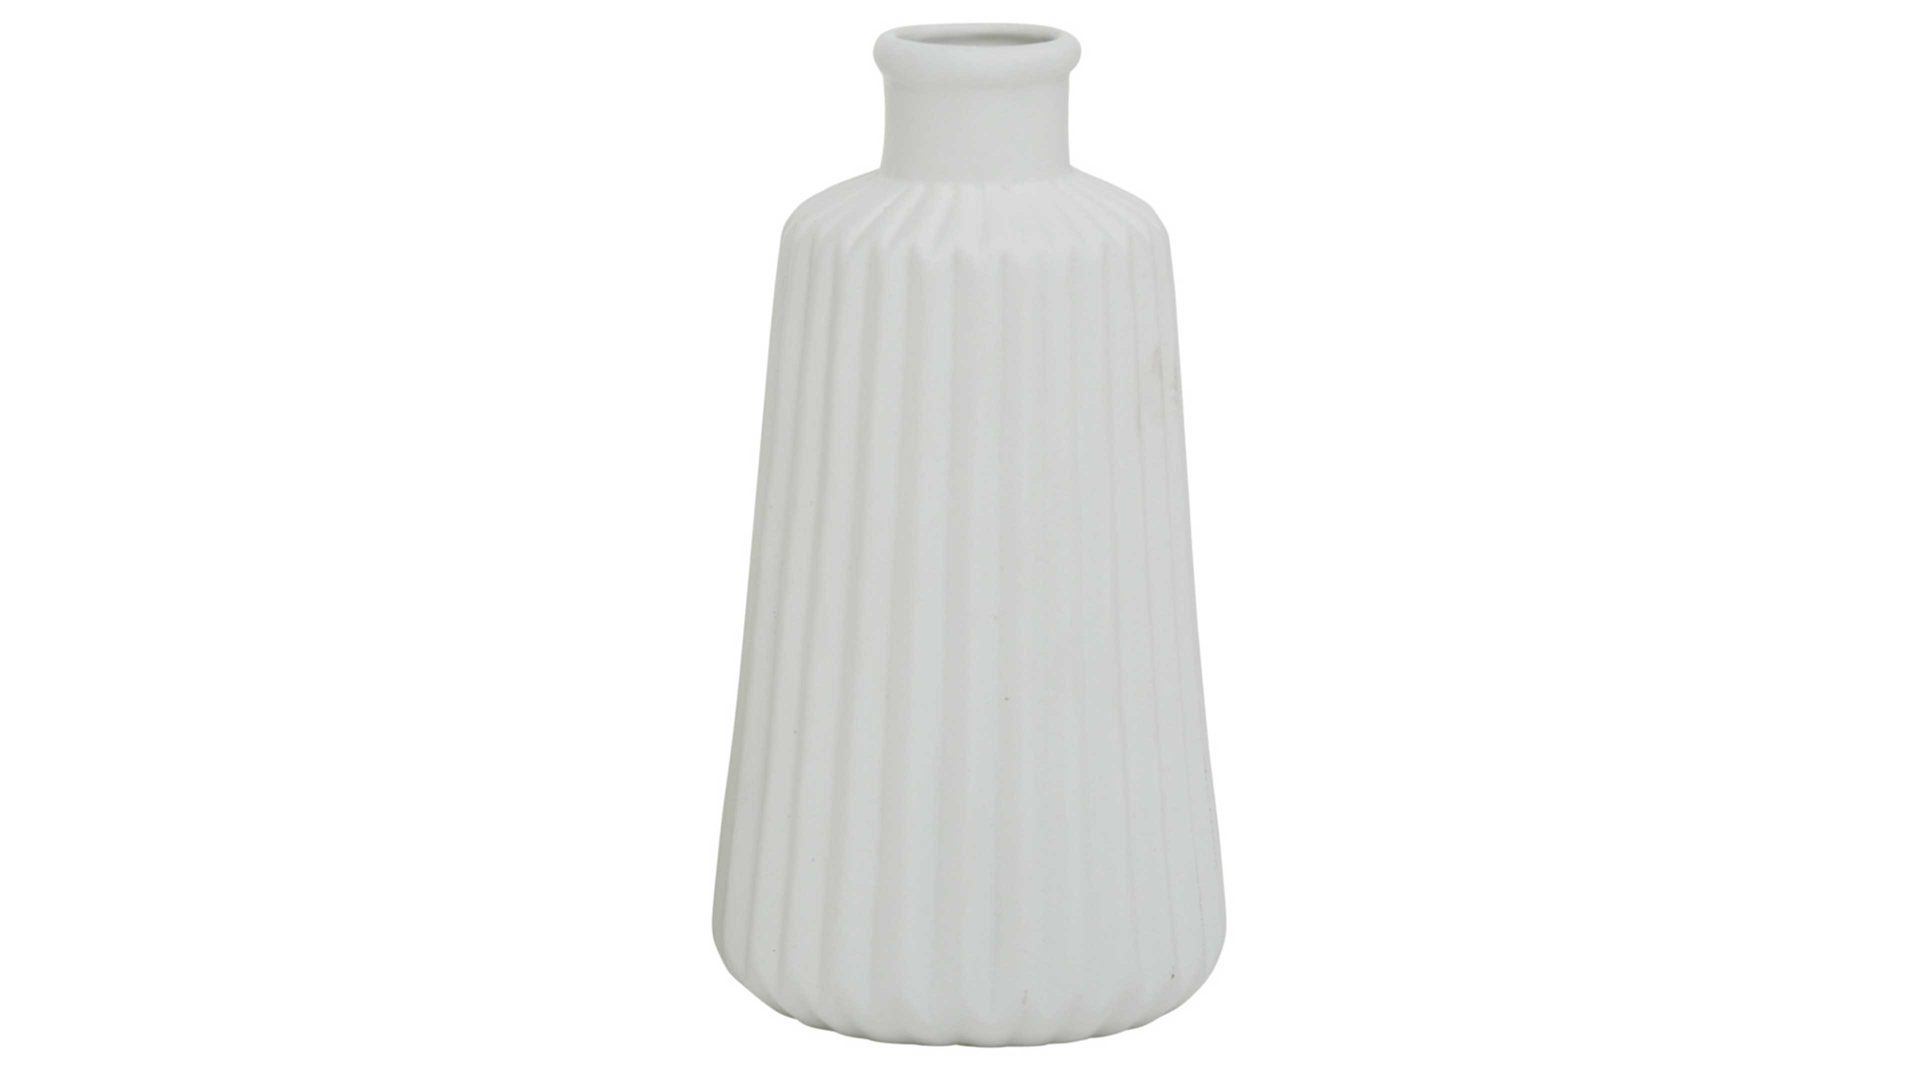 Vase Interliving BEST BUDDYS! aus Keramik in Weiß Interliving BEST BUDDYS! Vase Esko mattweißes Porzellan - Höhe ca. 17 cm